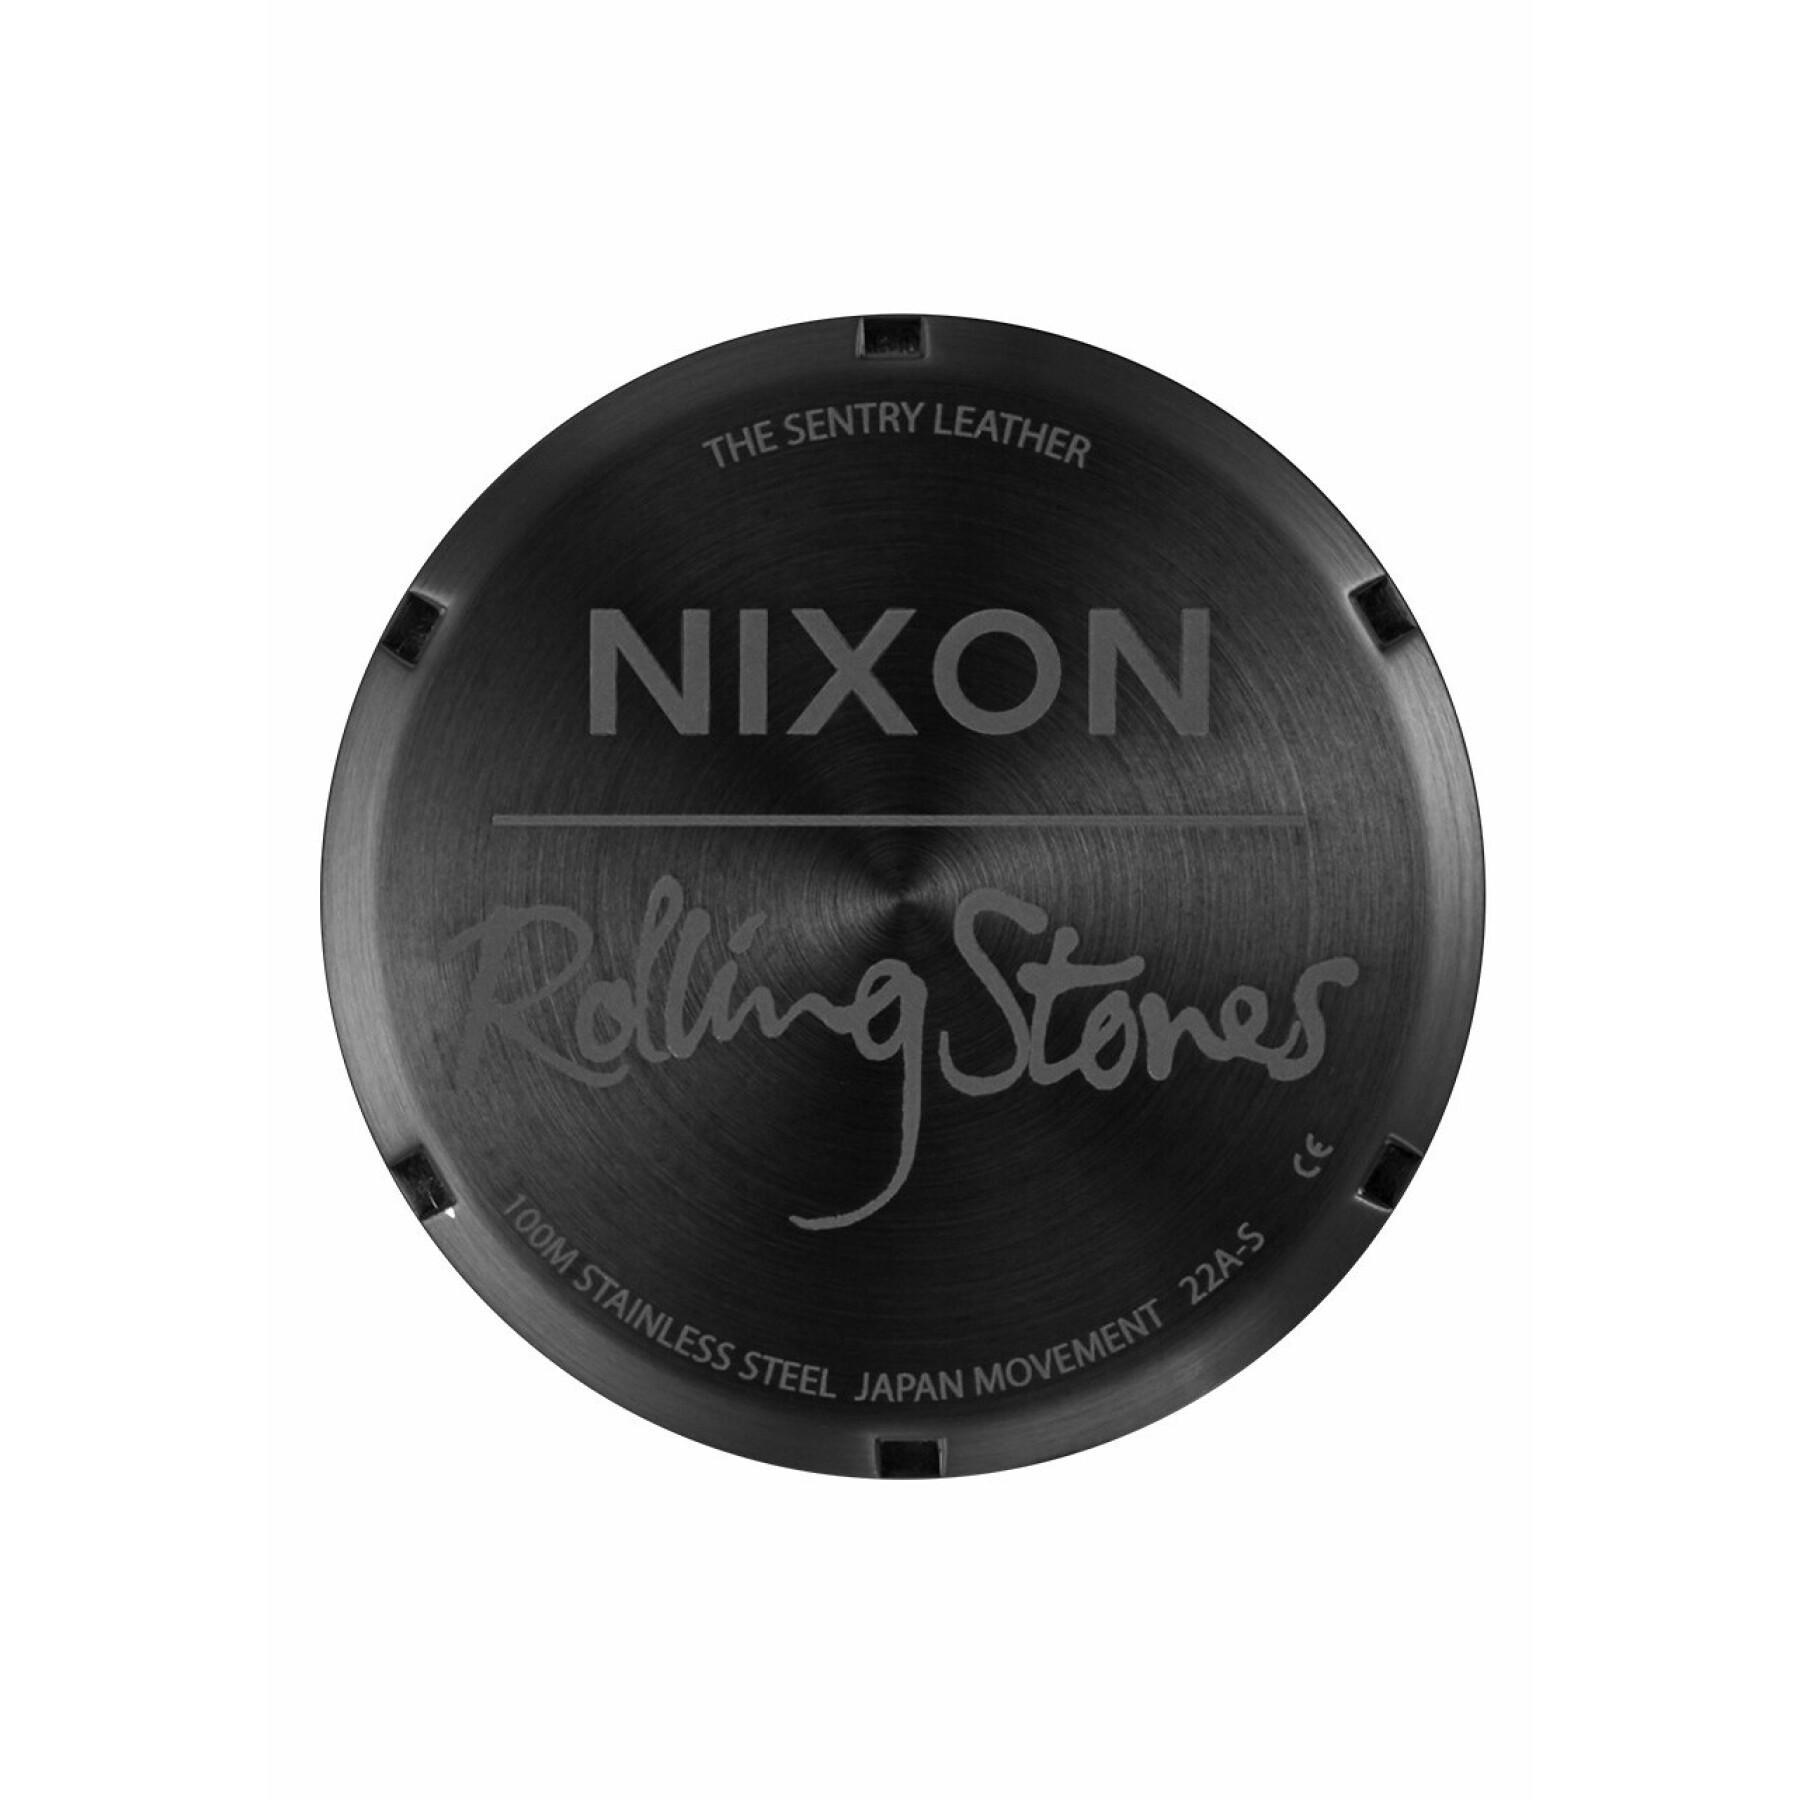 Reloj de piel Nixon Rolling Stones Sentry